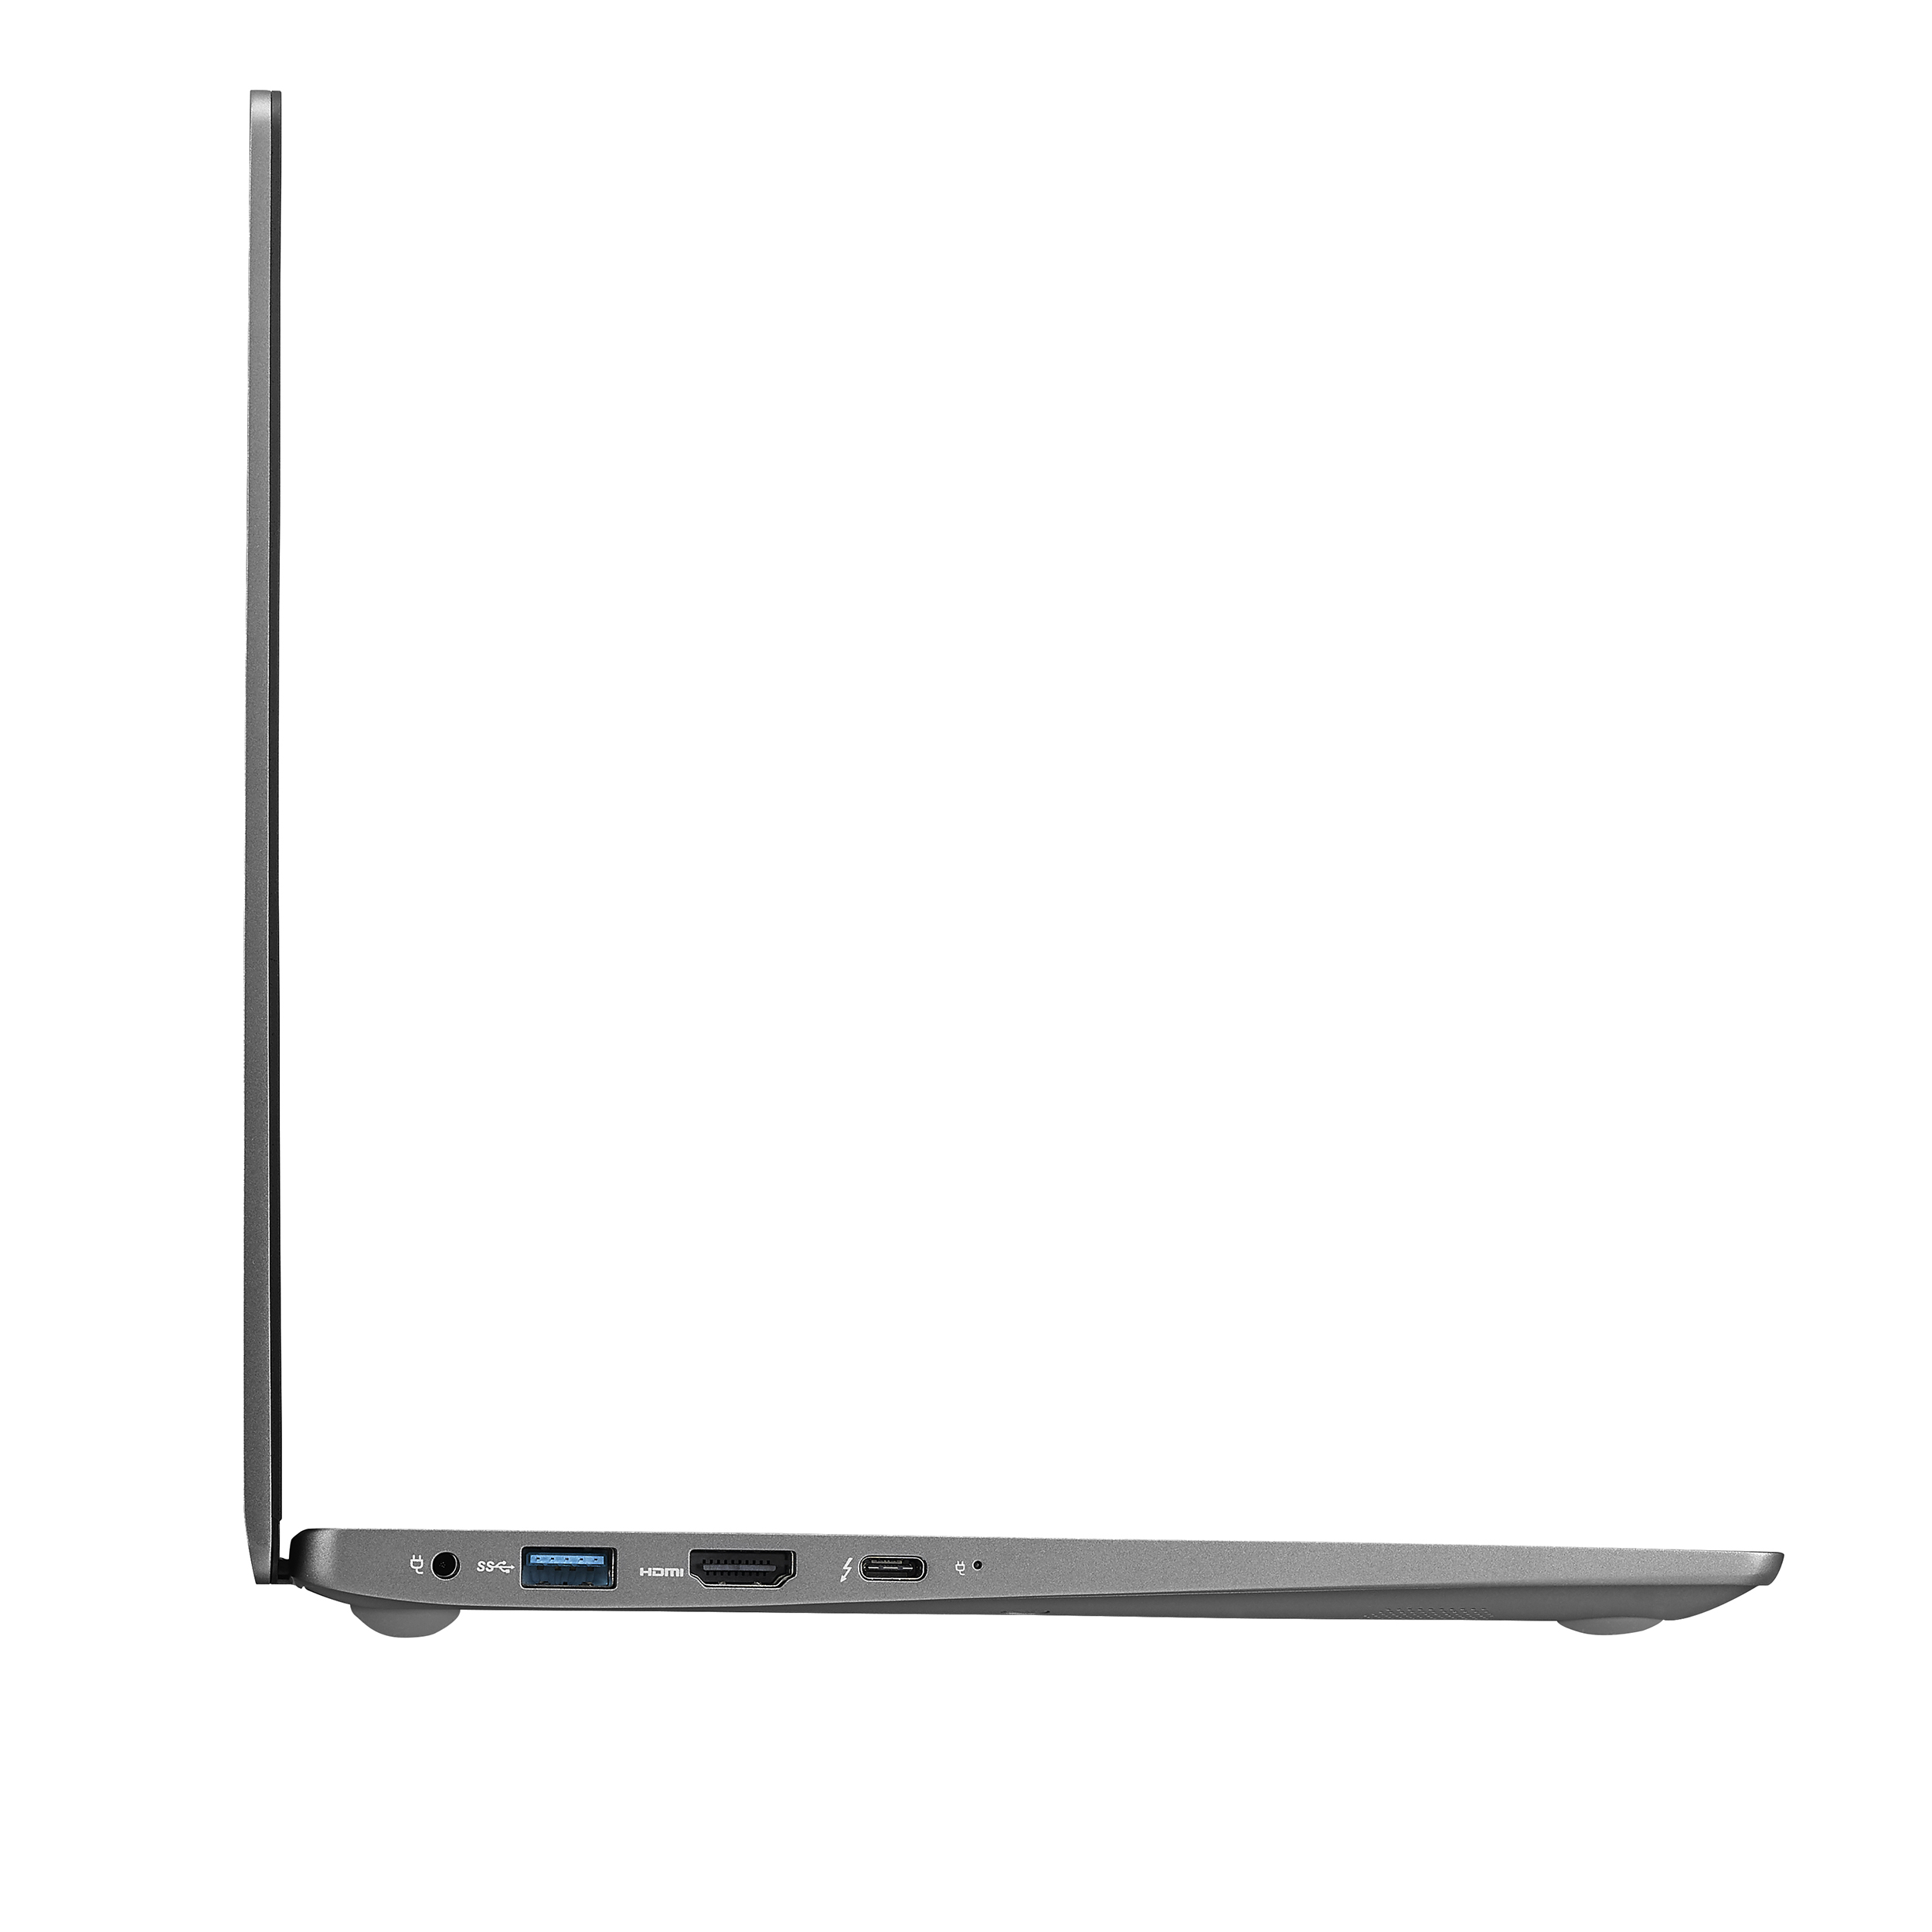 LG gram 14 inch Ultra-Lightweight Laptop with 10th Gen Intel Core Processor w/Intel Iris Plus - 14Z90N-U.AAS7U1 - image 9 of 13